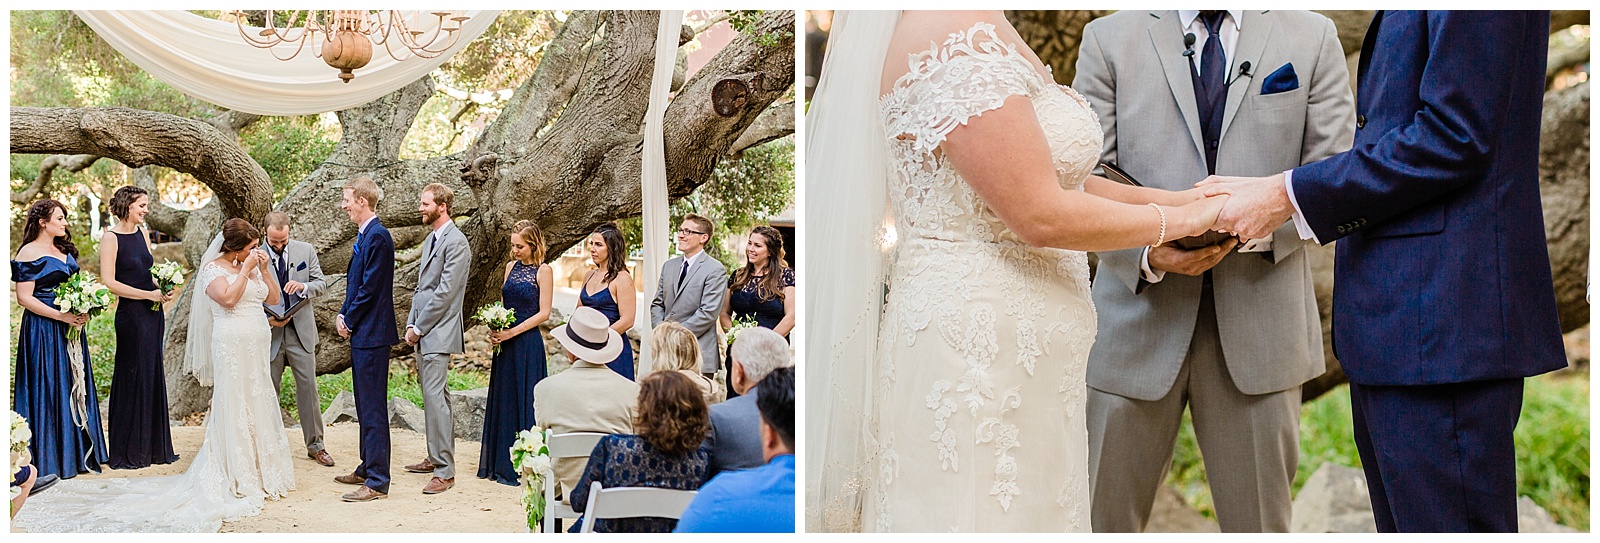 wedding ceremony details